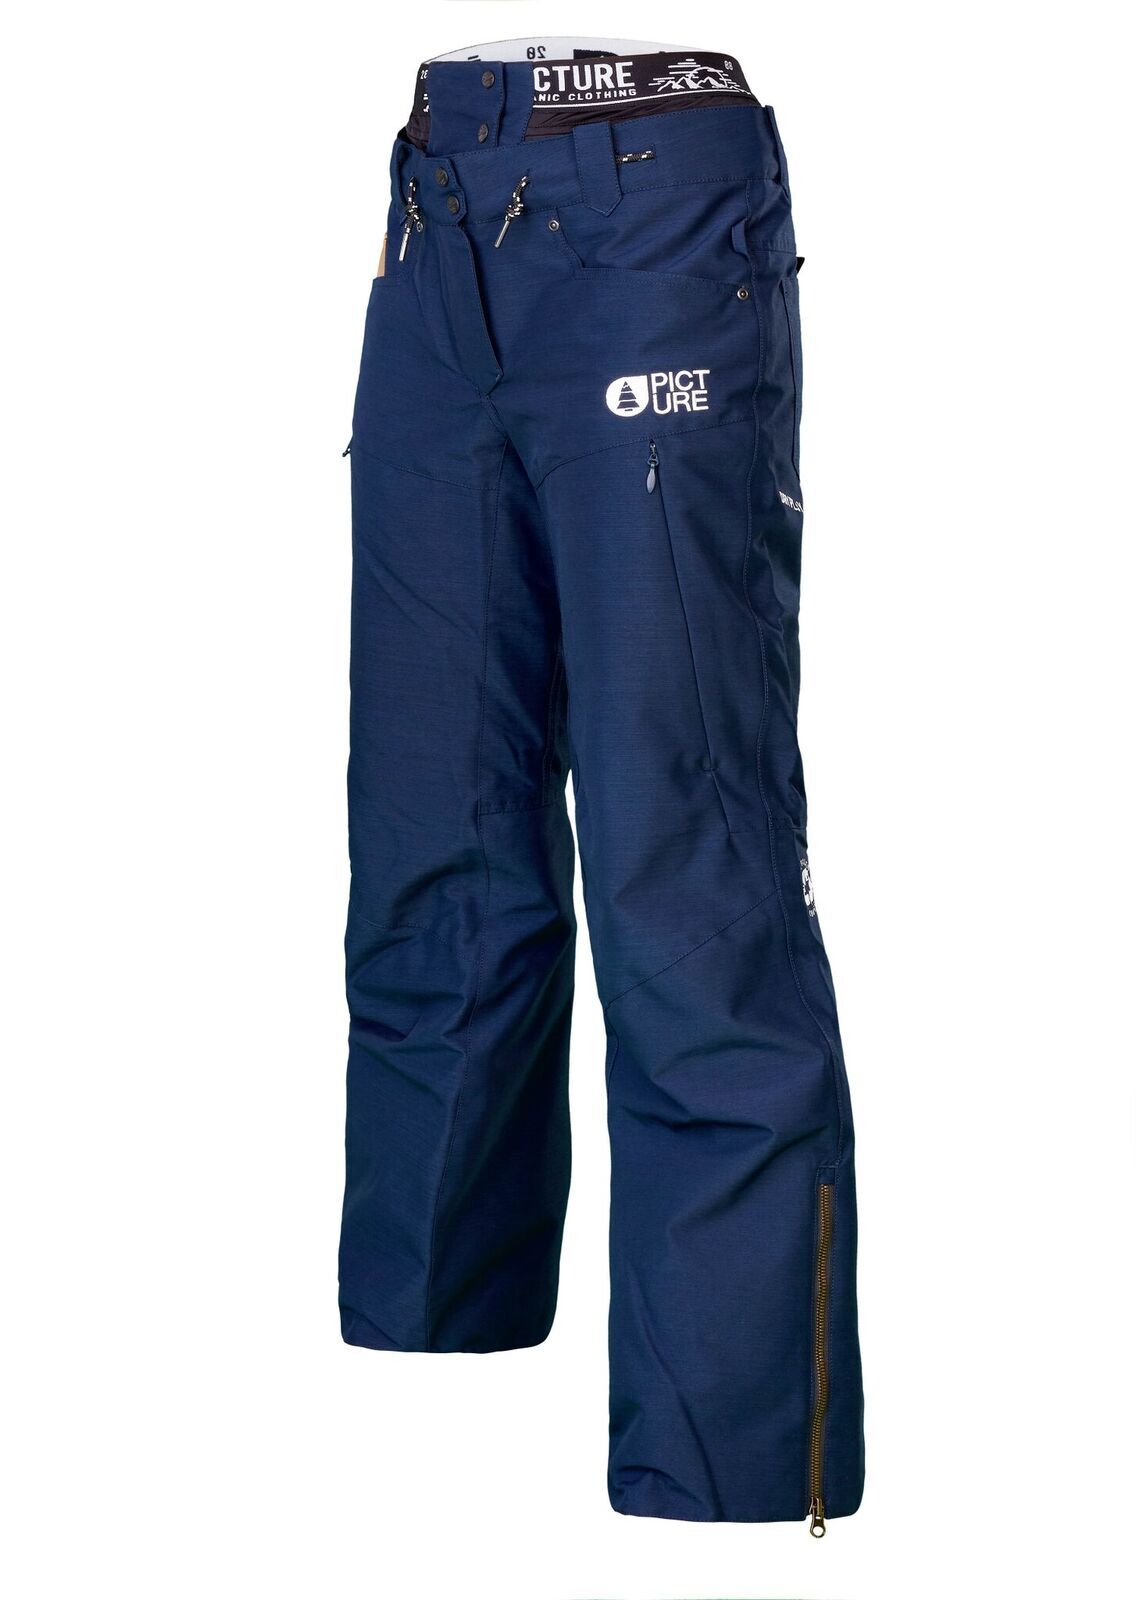 Picture Organic Clothing - Slany - Ski pants - Women's